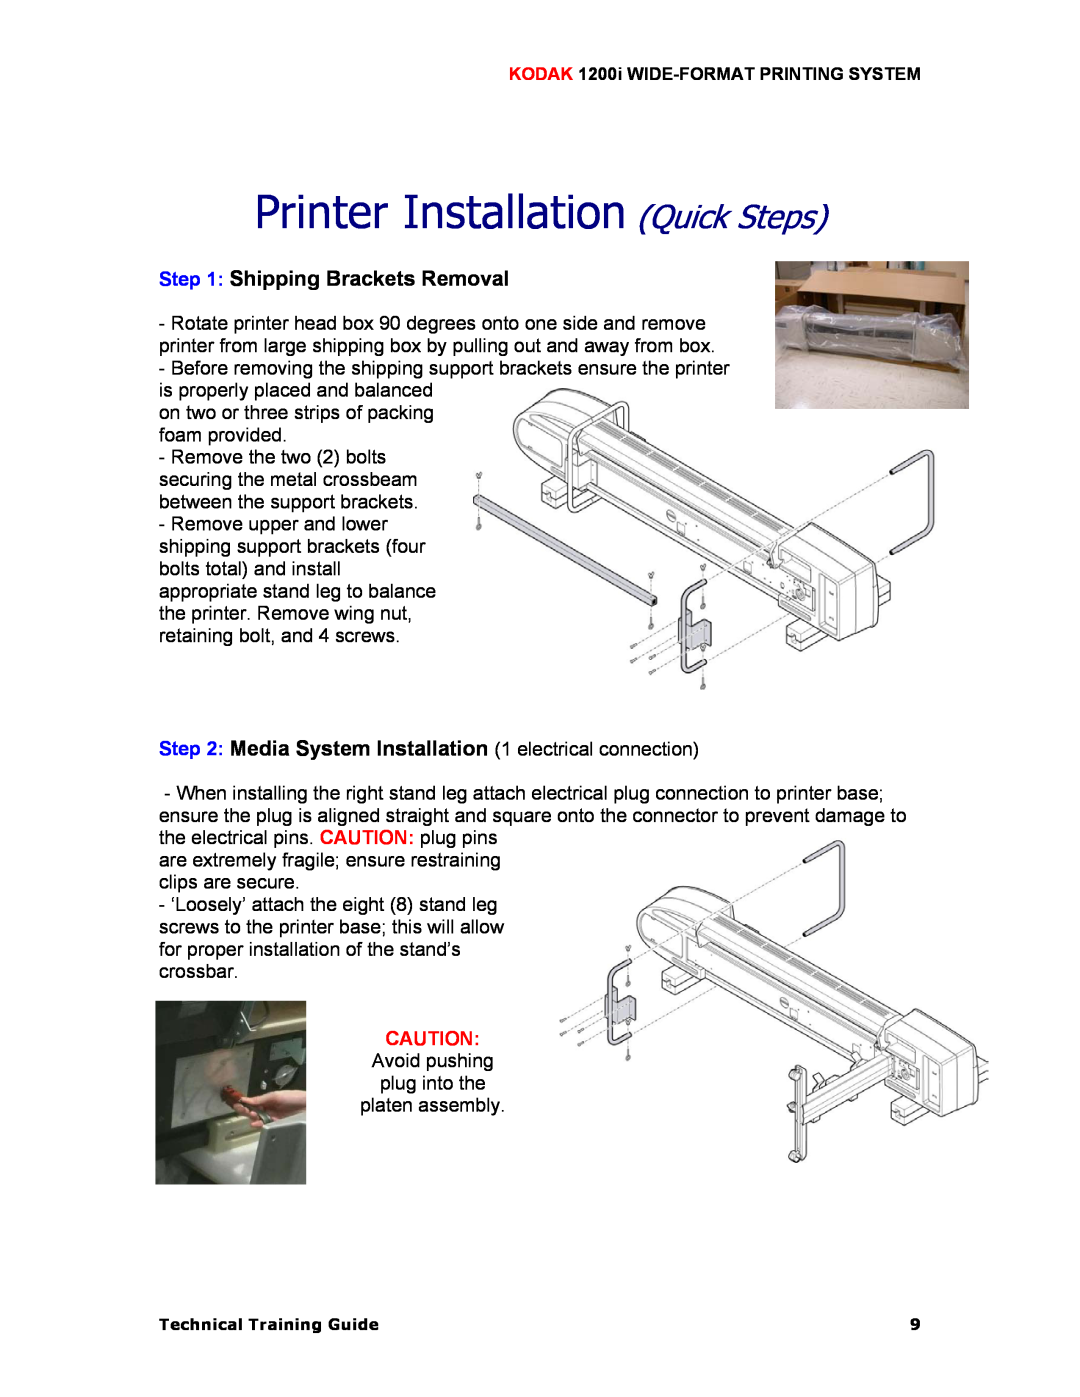 Kodak 1200I manual Printer Installation Quick Steps, Shipping Brackets Removal 